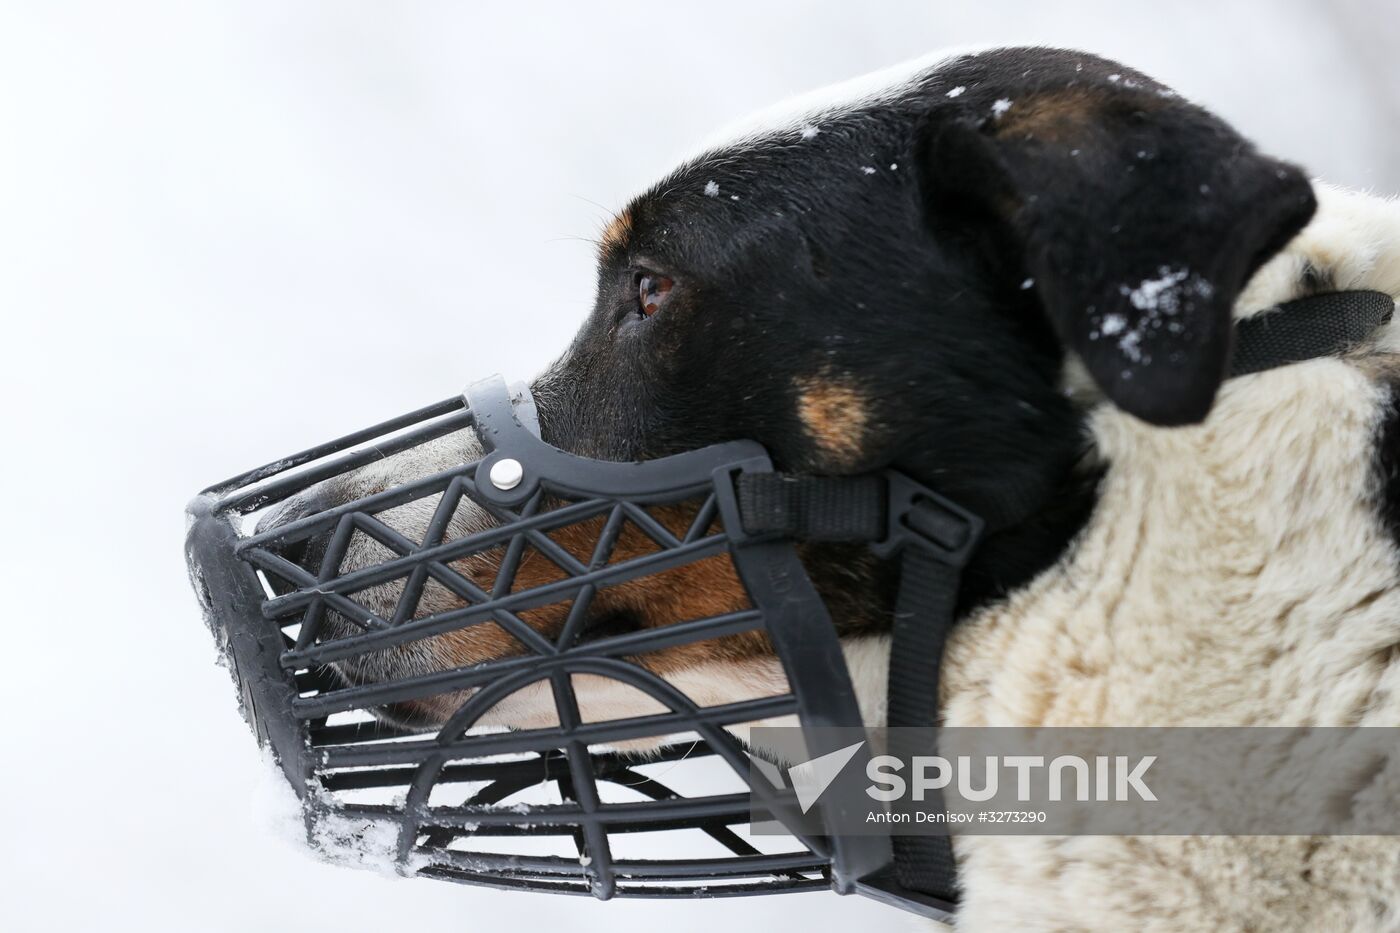 Liberal Democratic Party leader Vladimir Zhirinovsky visits Krasnaya Sosna dog rescue center